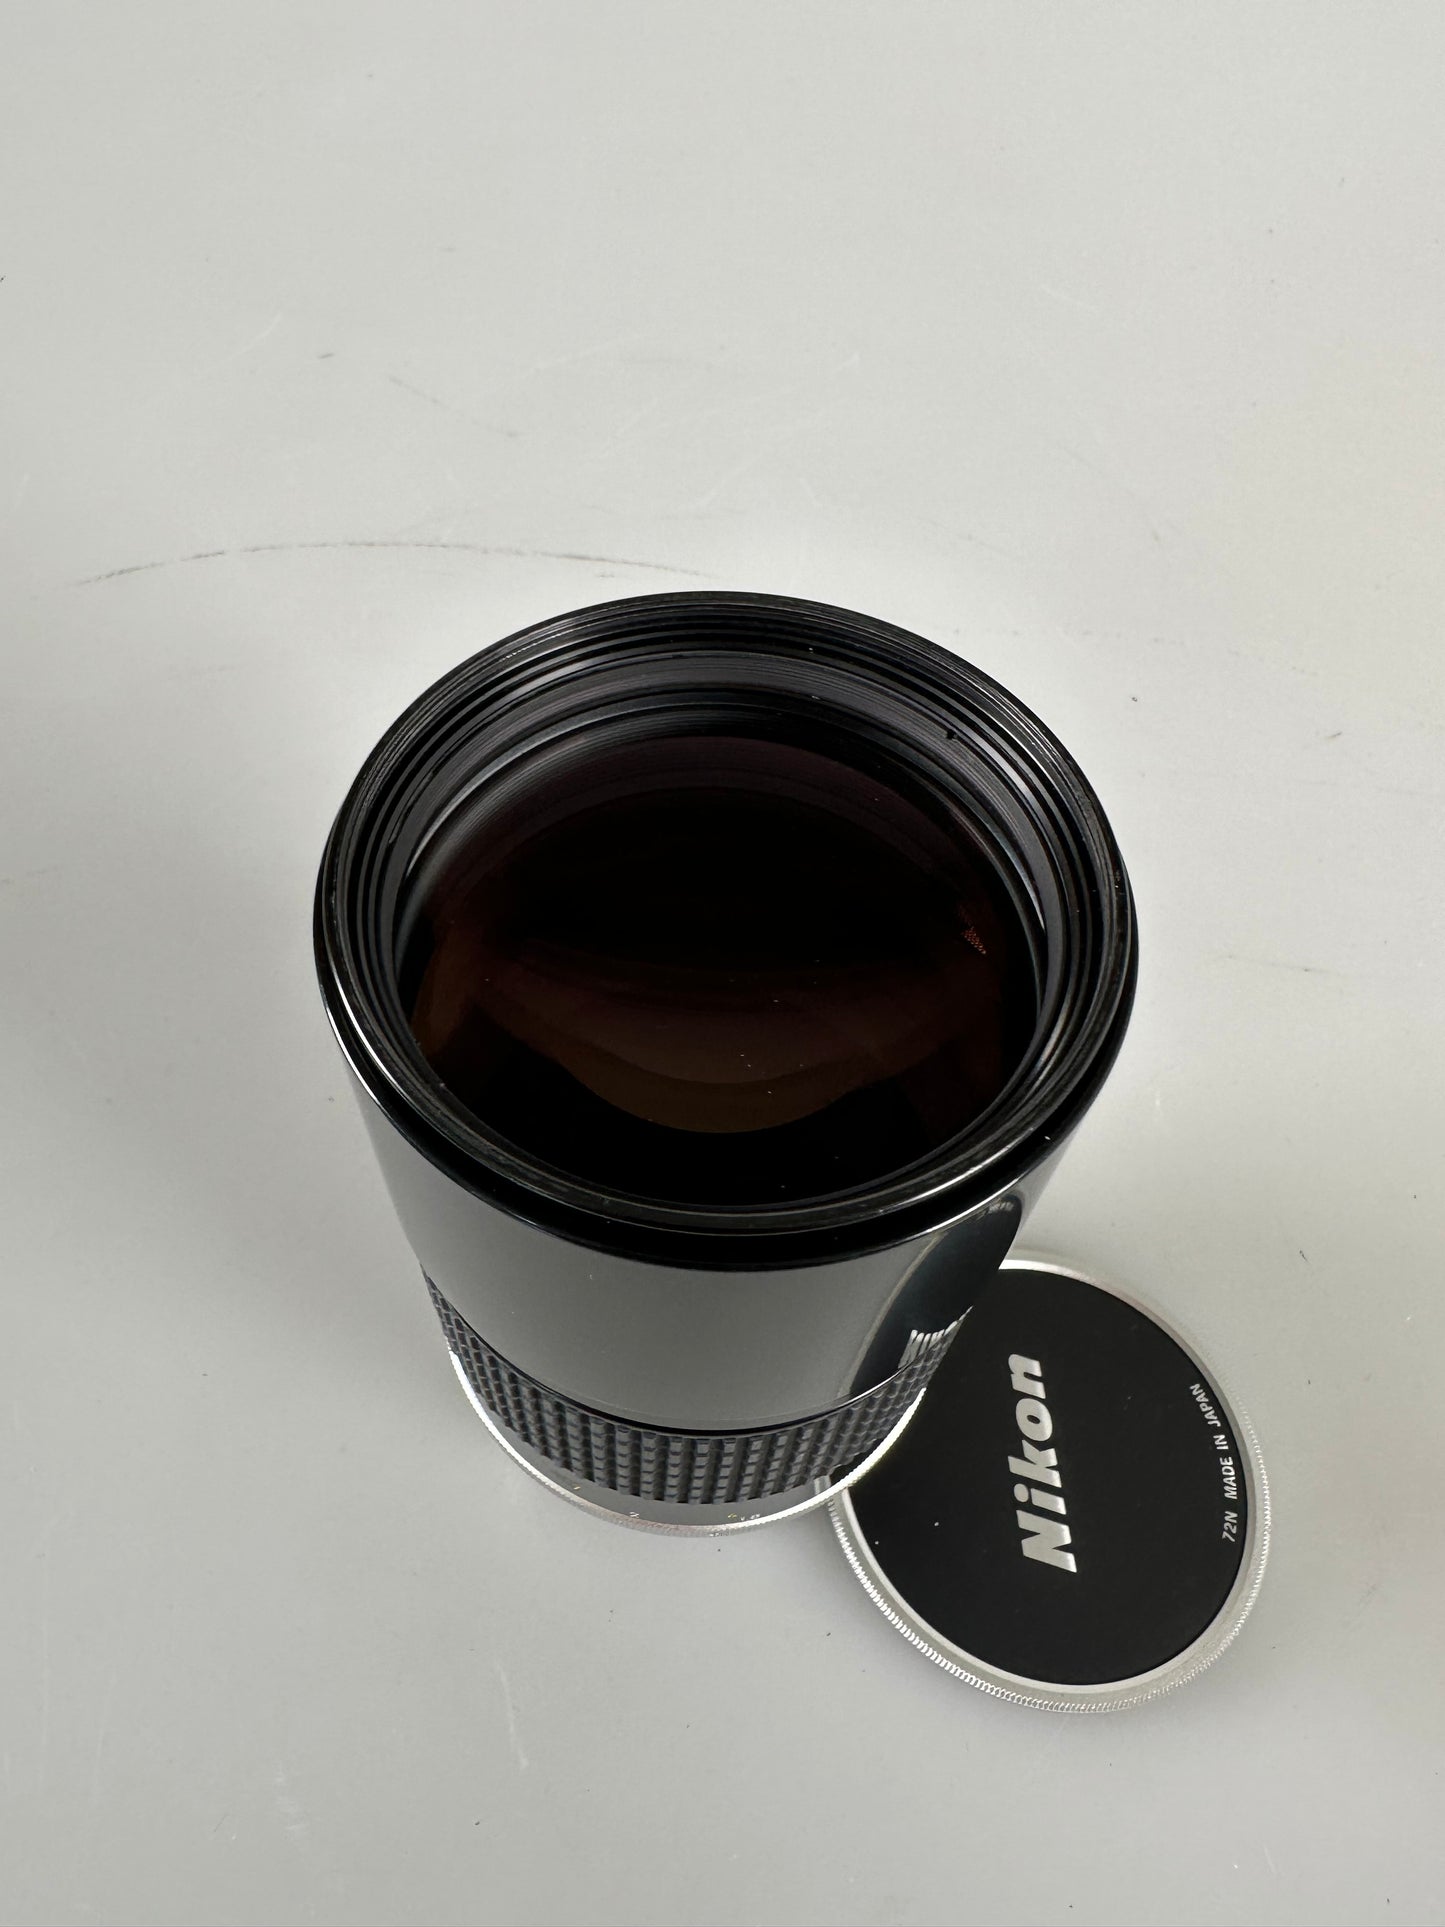 Nikon Nikkor ED AIS Ai-s 180mm f2.8 Telephoto MF Lens